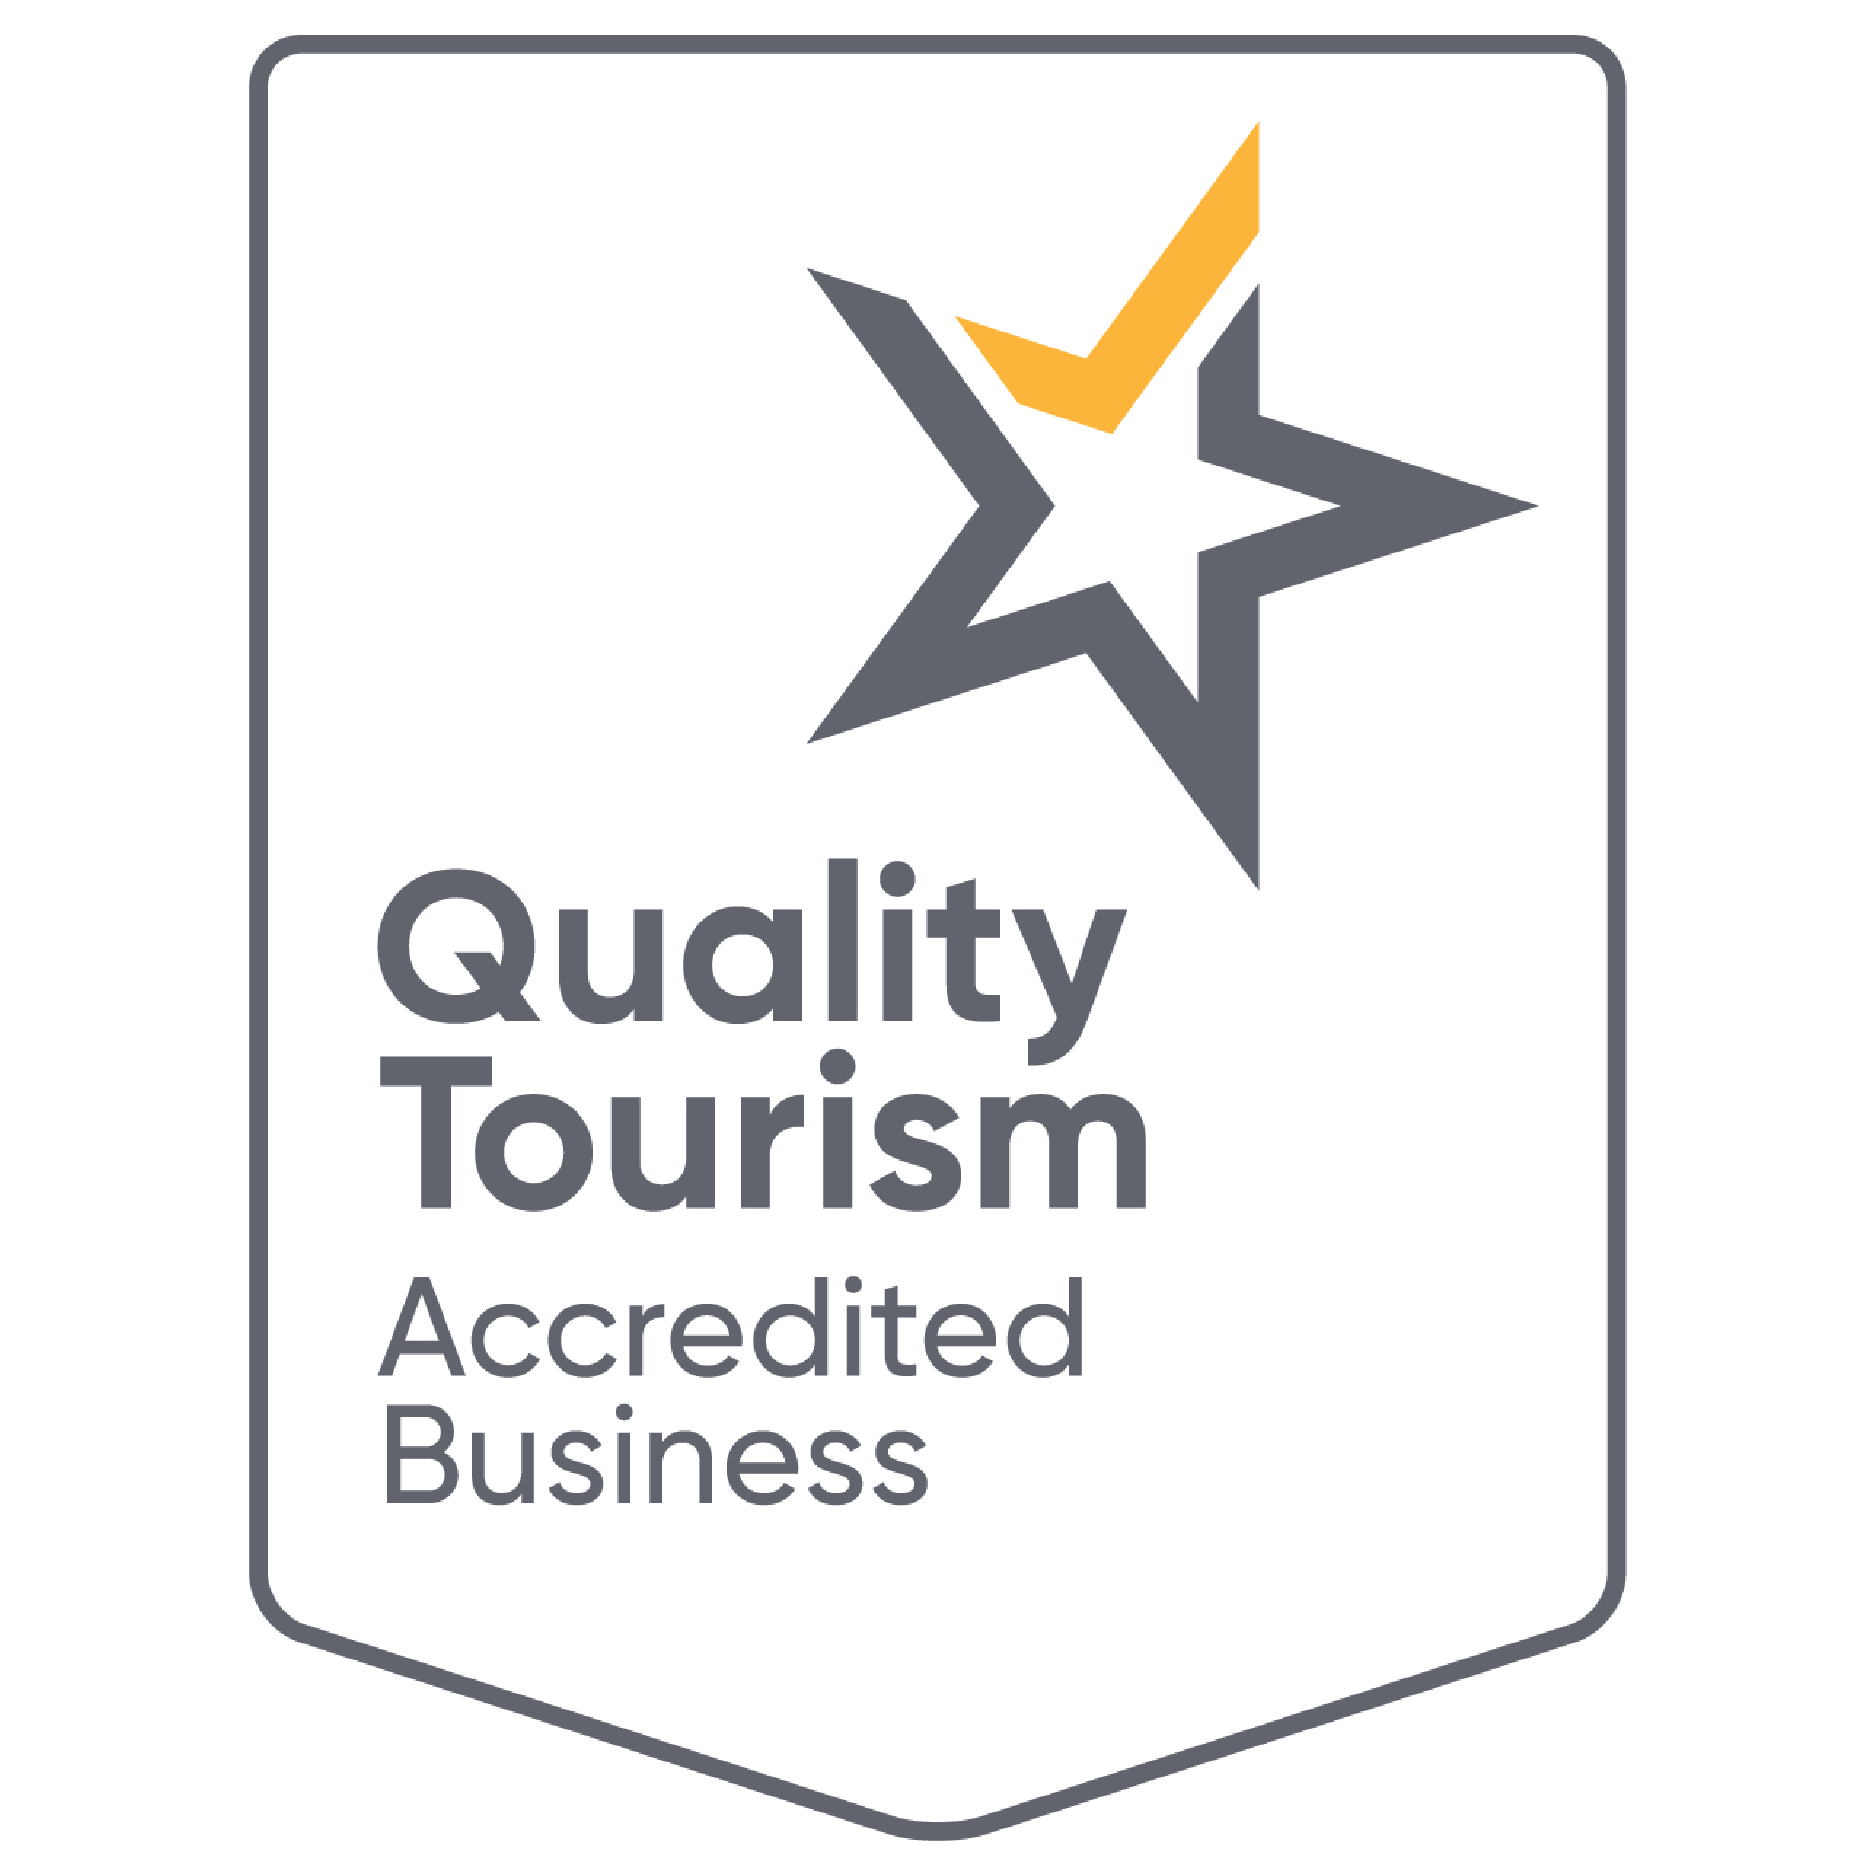 Quality Tourism Award.png